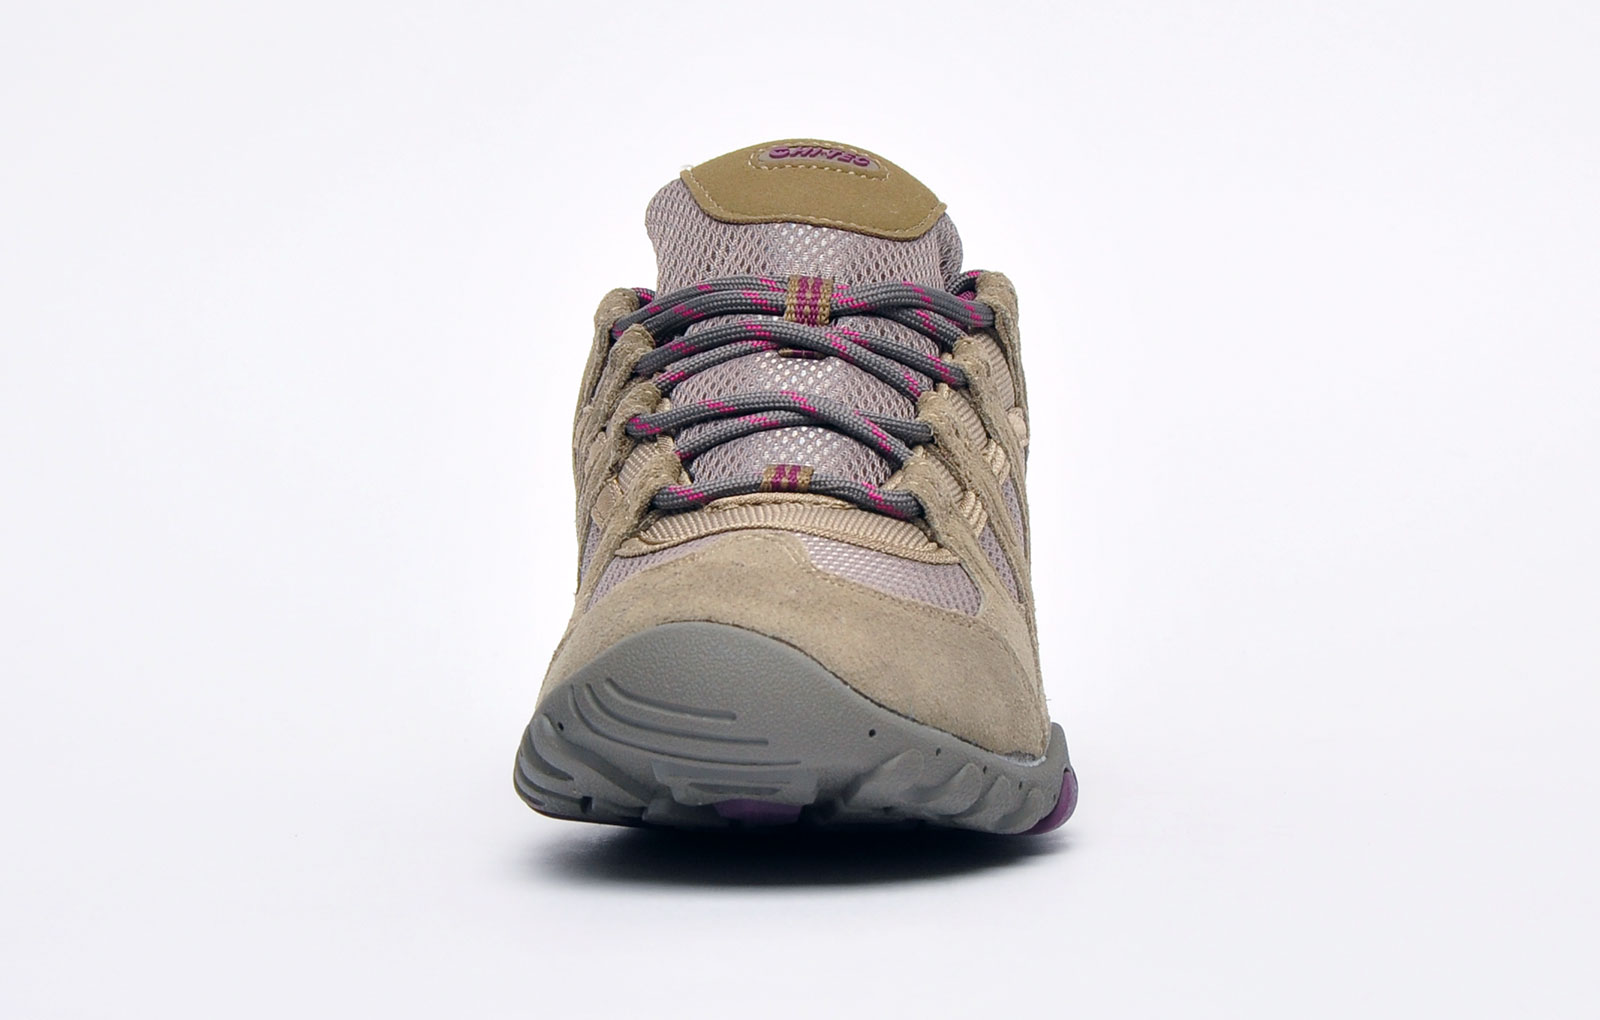 Womens HI TEC QUADRA Suede Ladies Walking Hiking Casual Trainers Boots Shoes SZ 